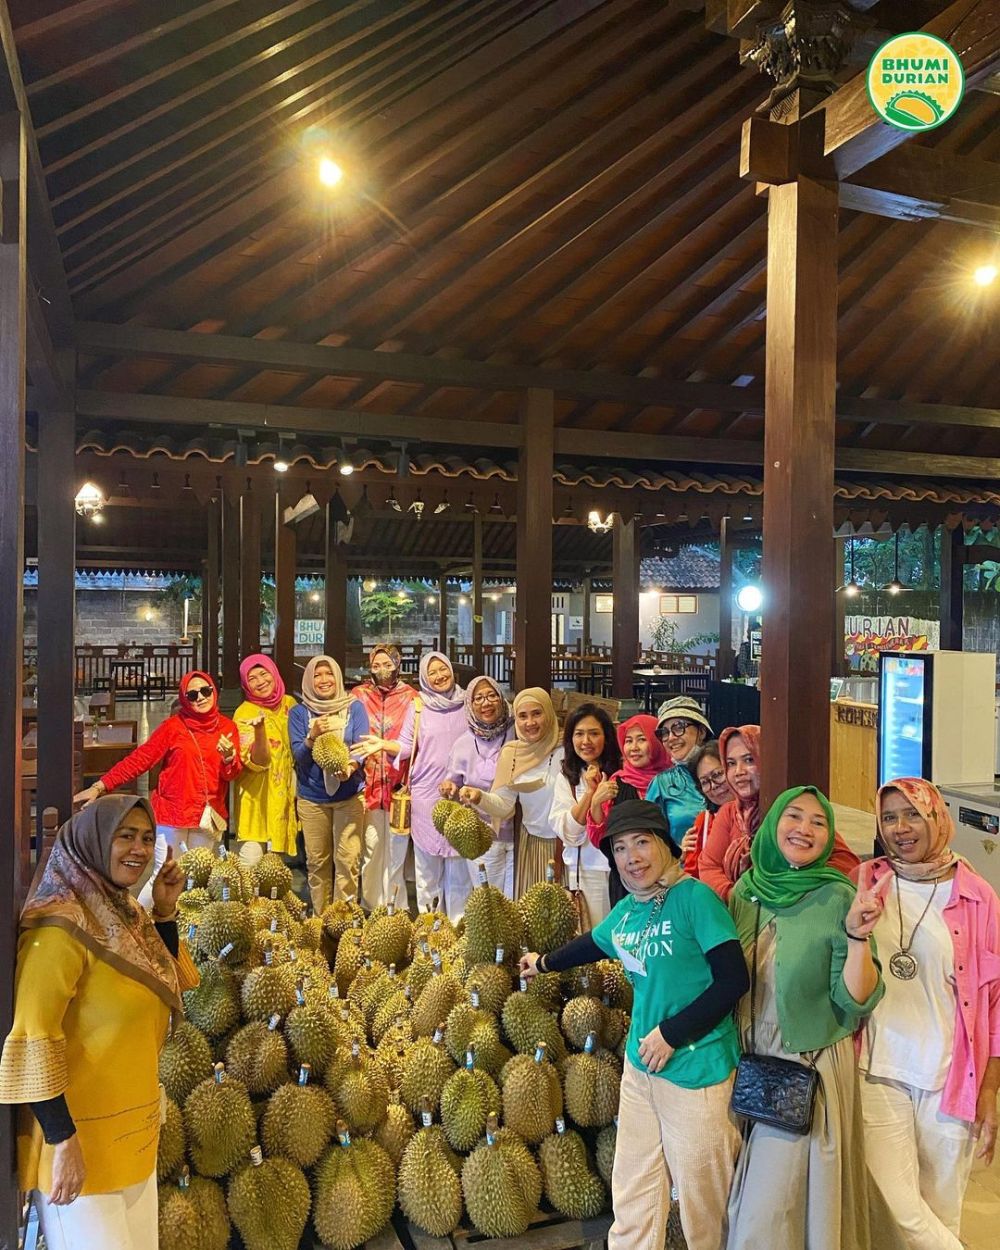 Bhumi Durian, Spot Makan Durian di Jogja Sekalian Healing